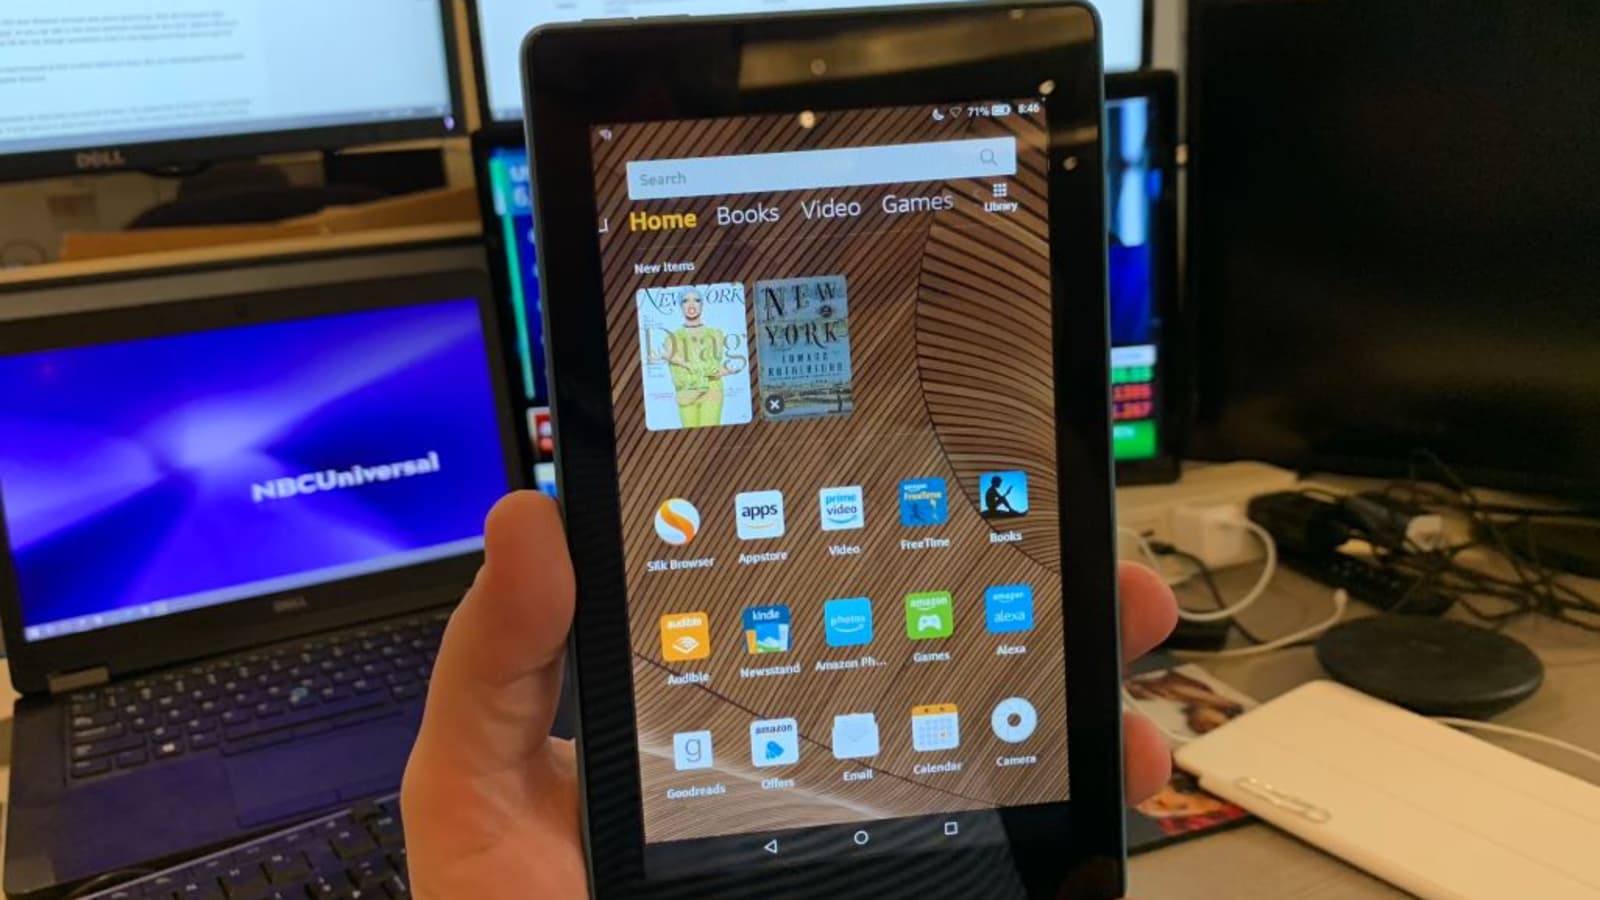 Amazon Fire 7 2019 Tablet Review Skip It Buy Fire Hd8 Instead